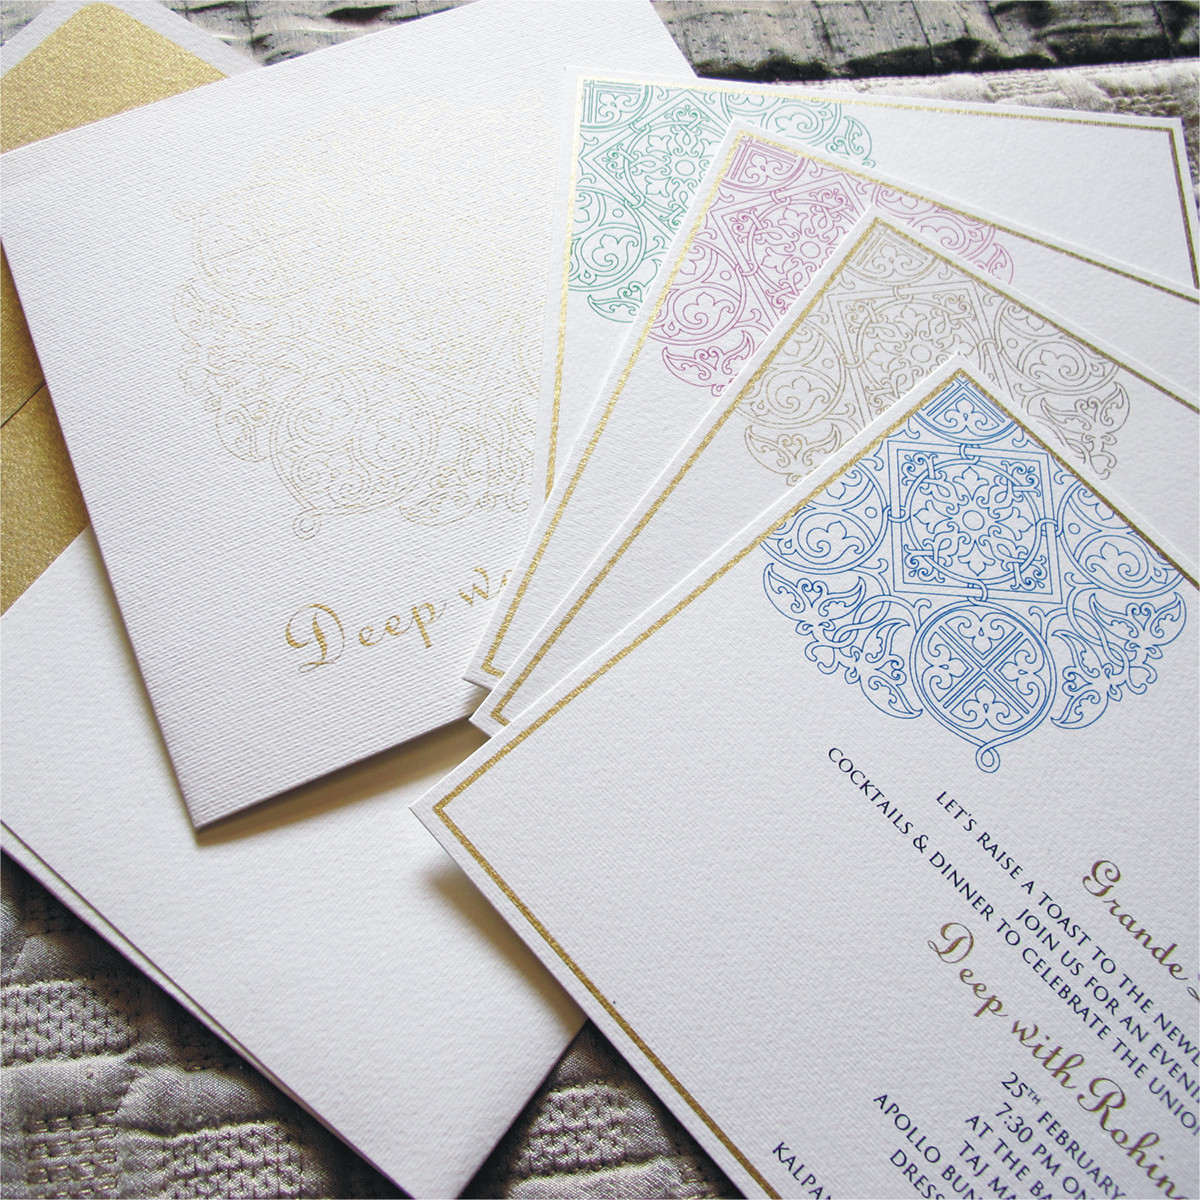 cards  wedding cards invitations  invites lifestyle custom made  Personalized print wedding Wedding Invites party